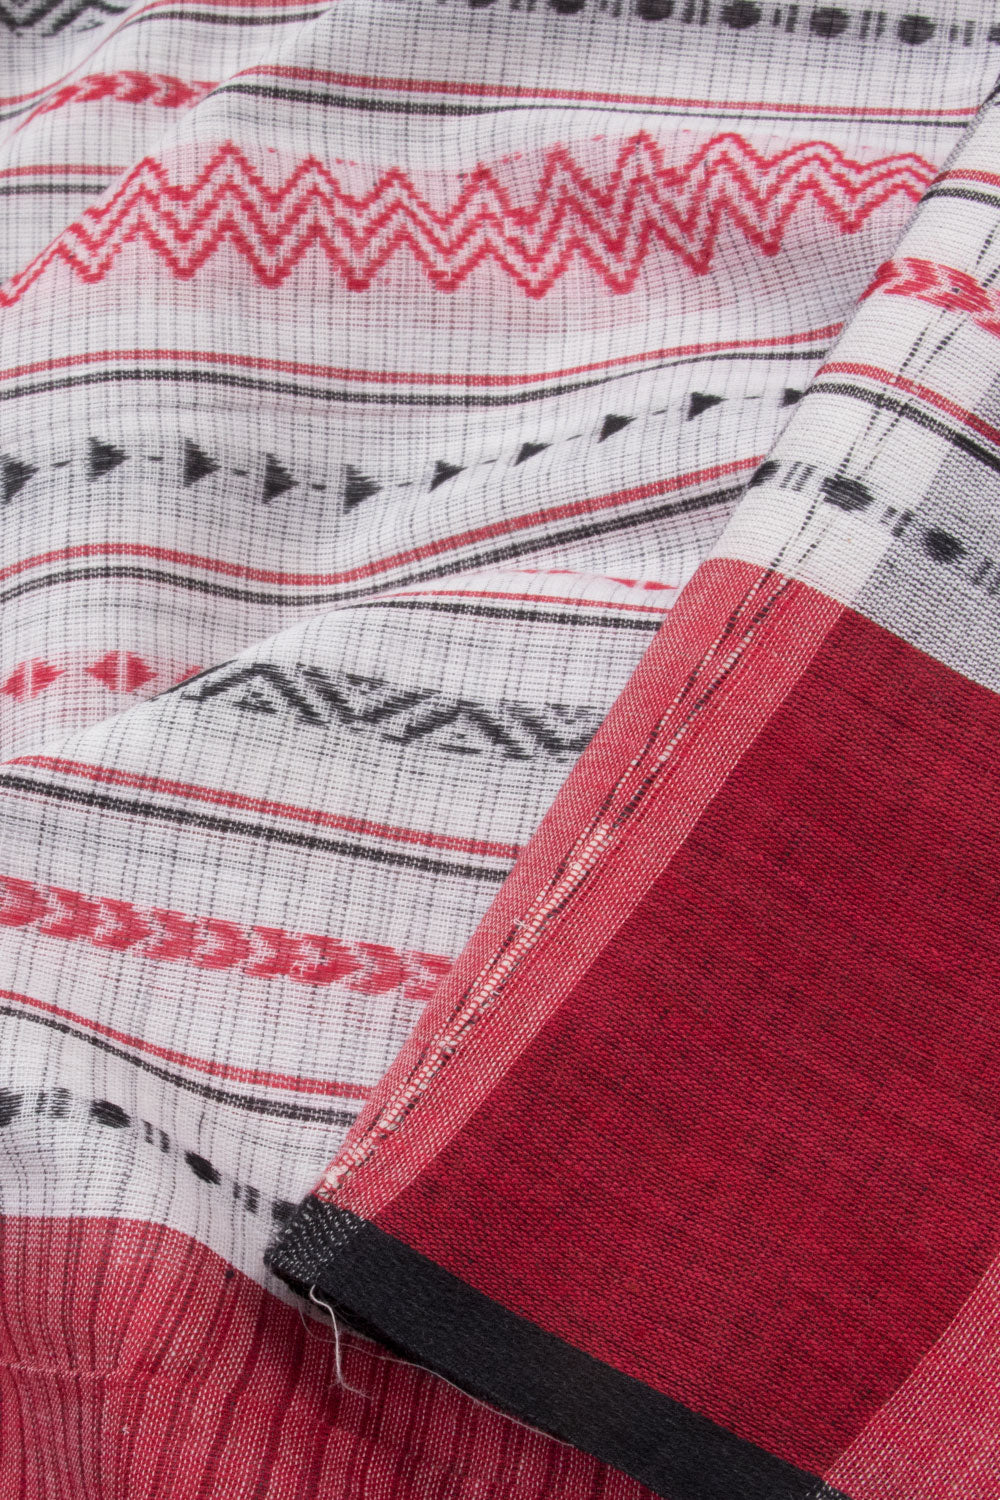 Buy Desh Bidesh Online For Cotton Handloom Sari Tant sare In Bengal